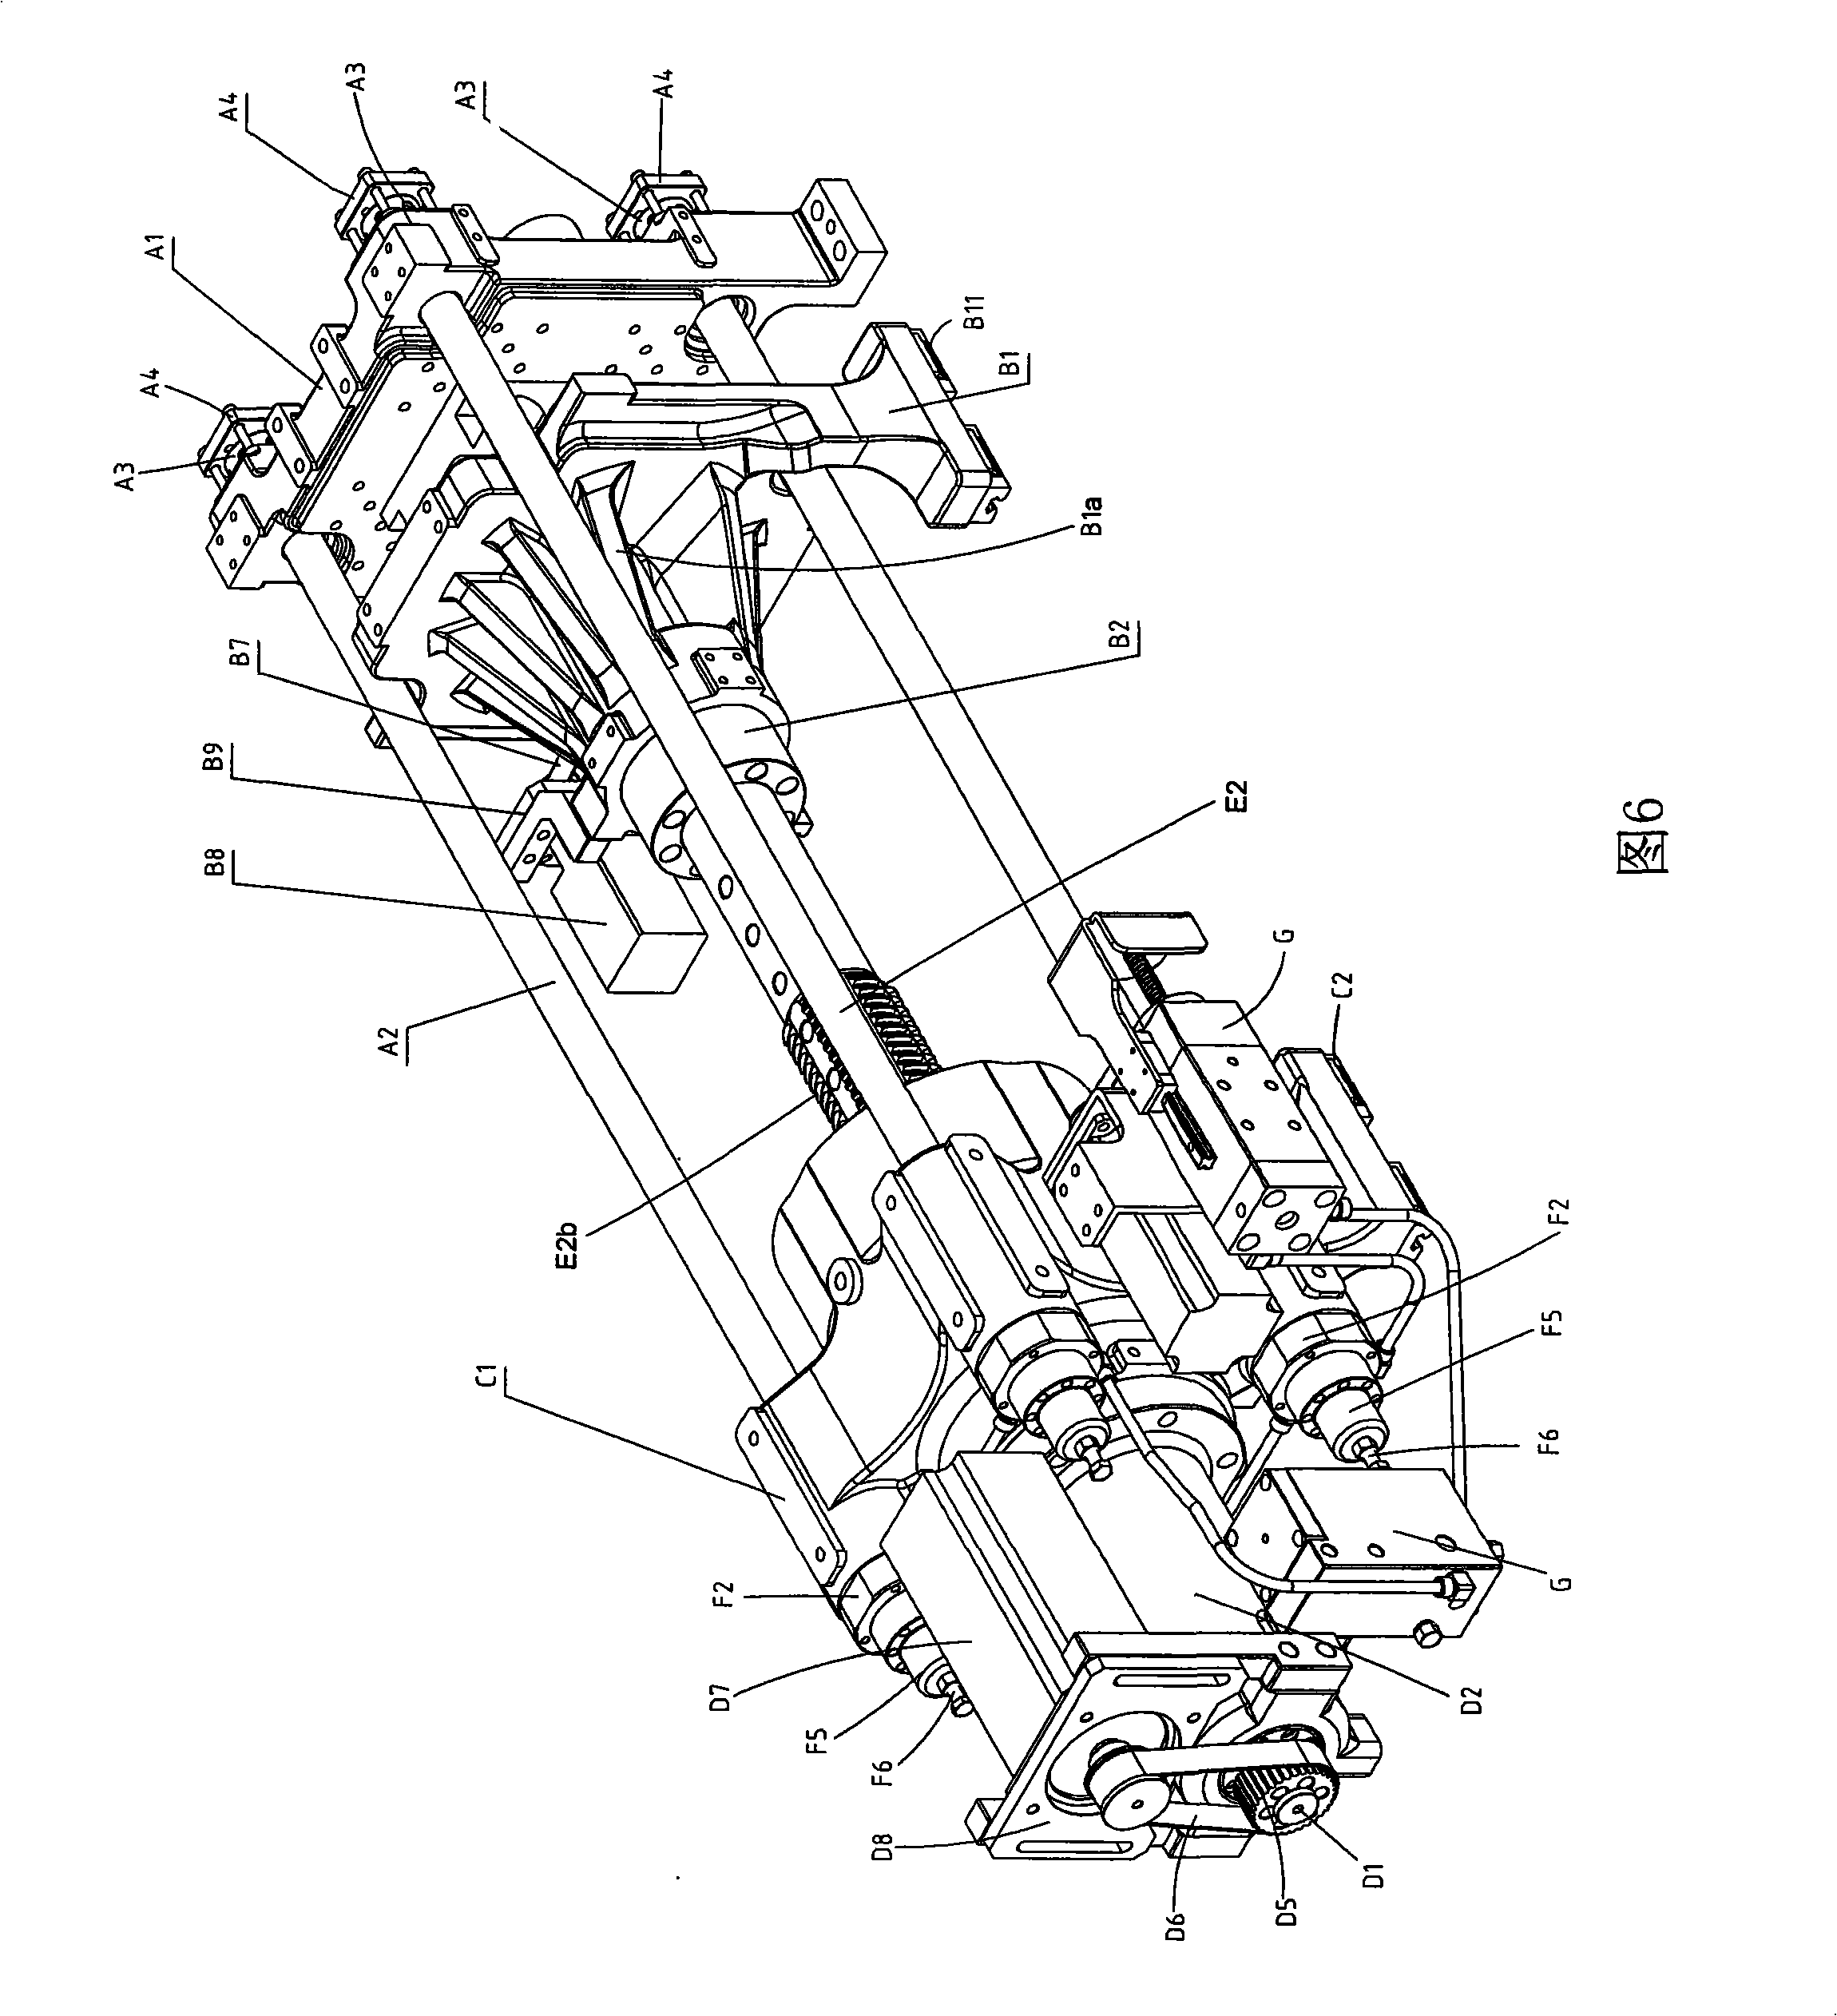 Mode locking mechanism of electric plastic injection machine